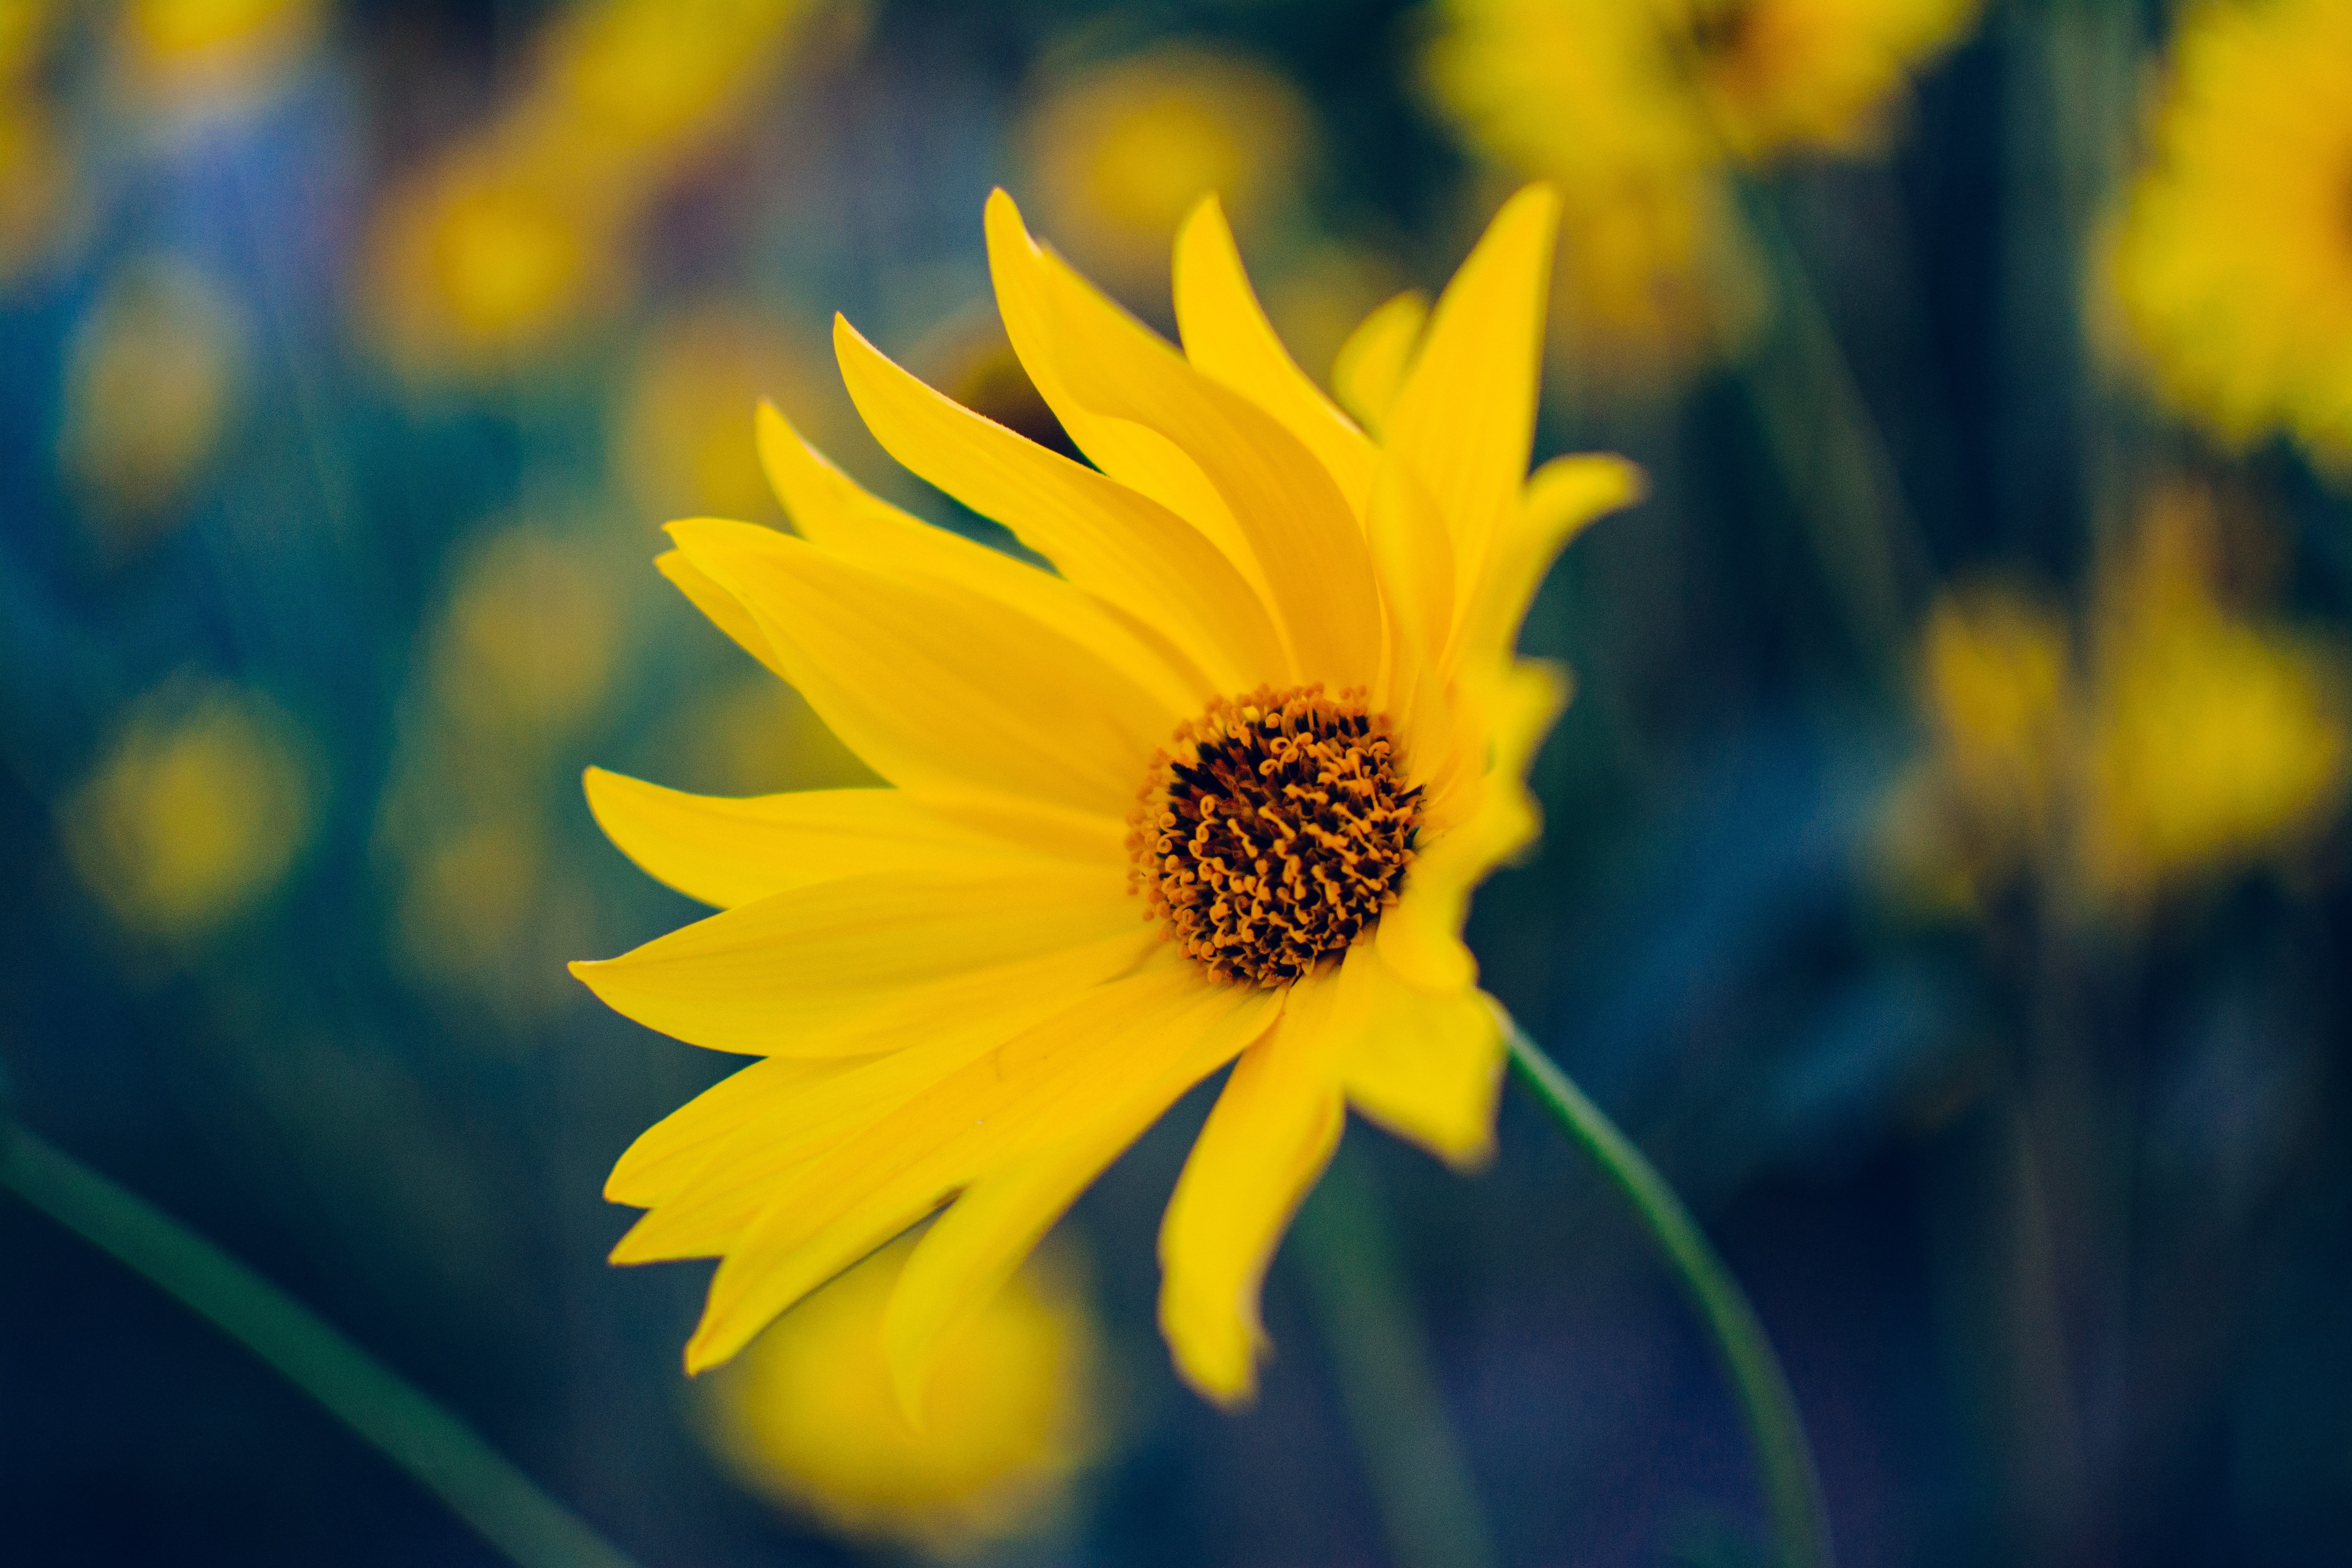 sunflower in macro shot photography